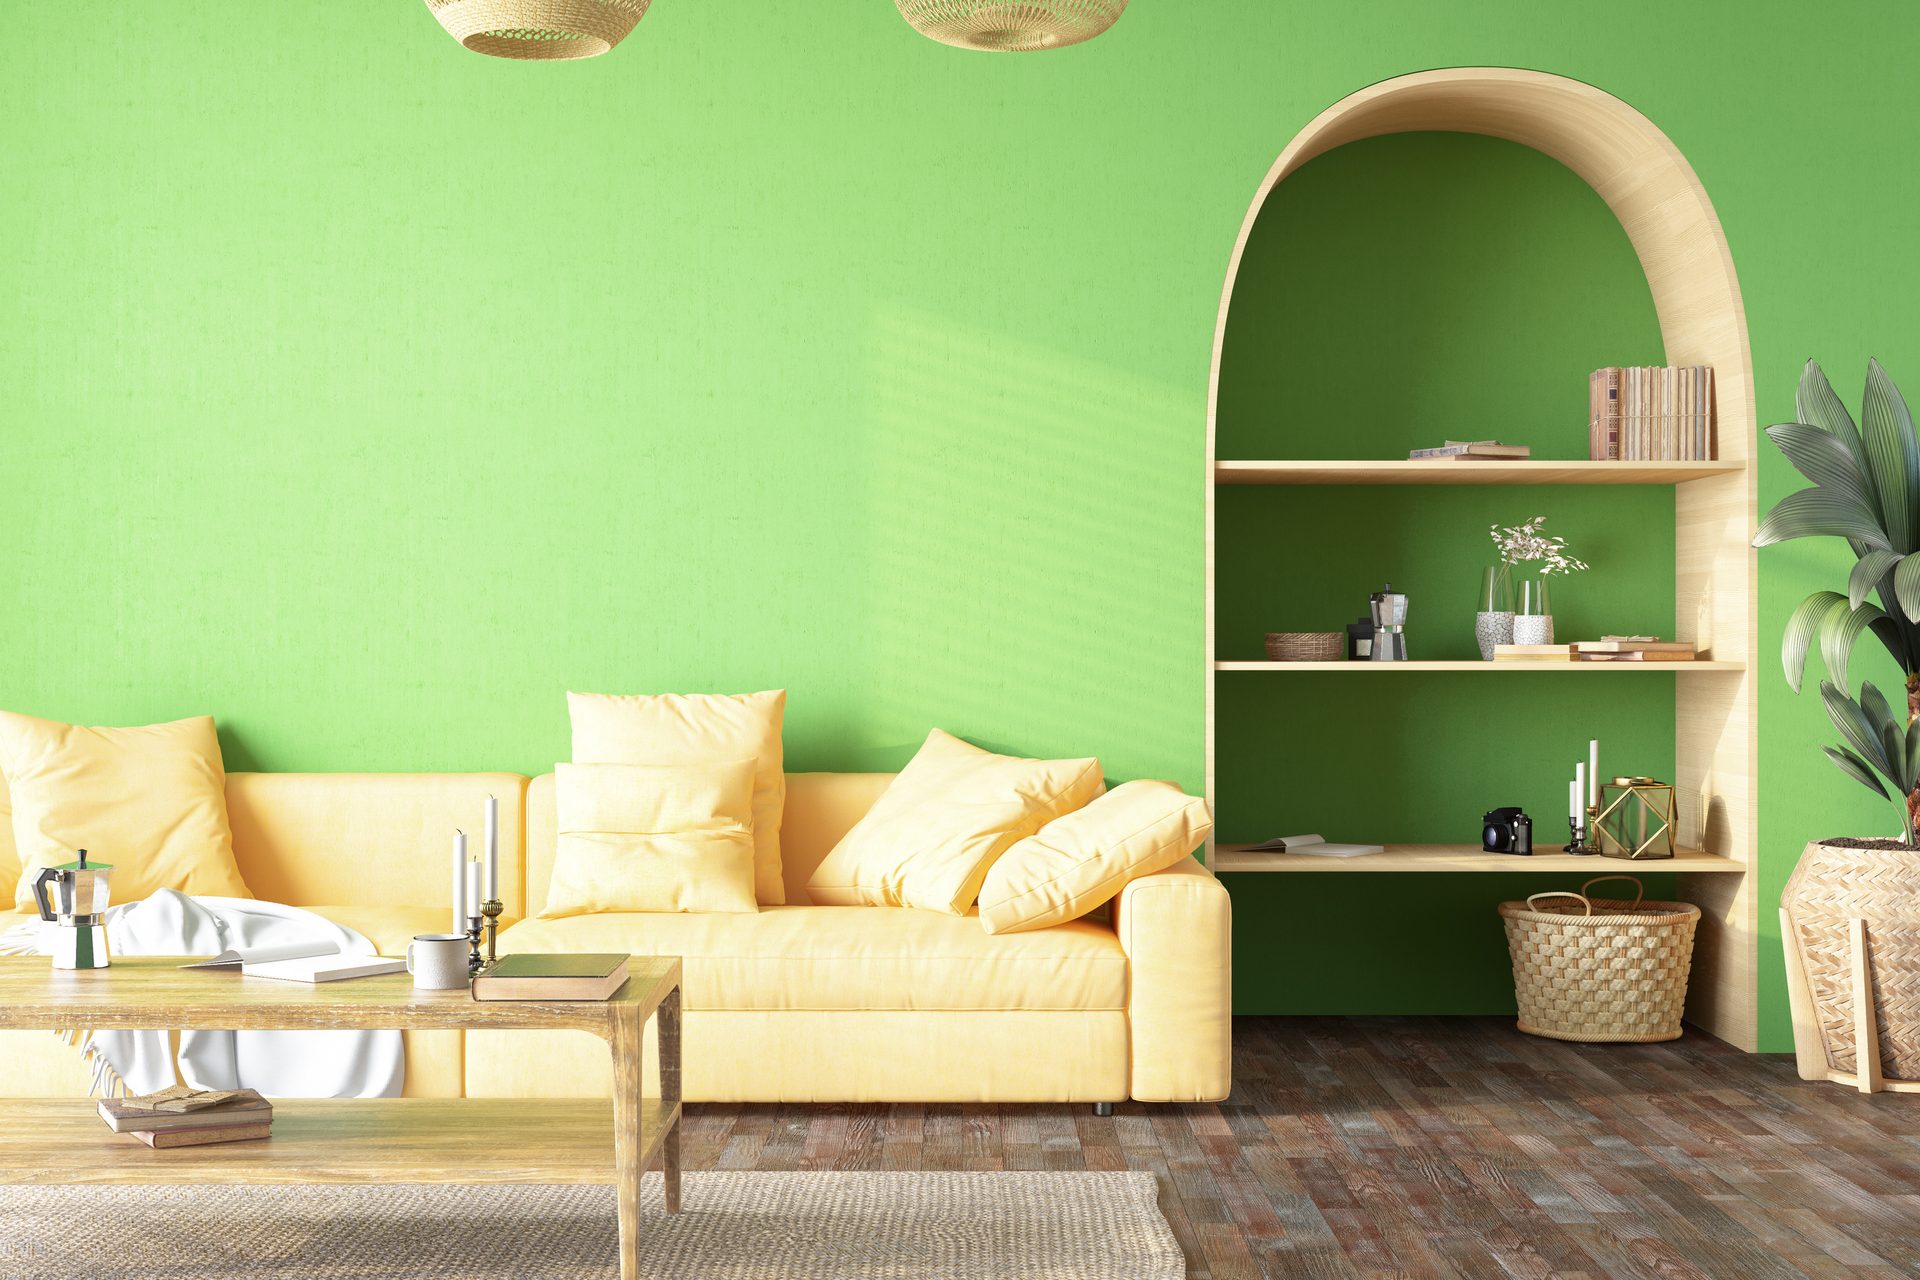 Interior design, Furniture, Plant, Green, Flowerpot, Wood, Houseplant, Couch, Lighting, Yellow